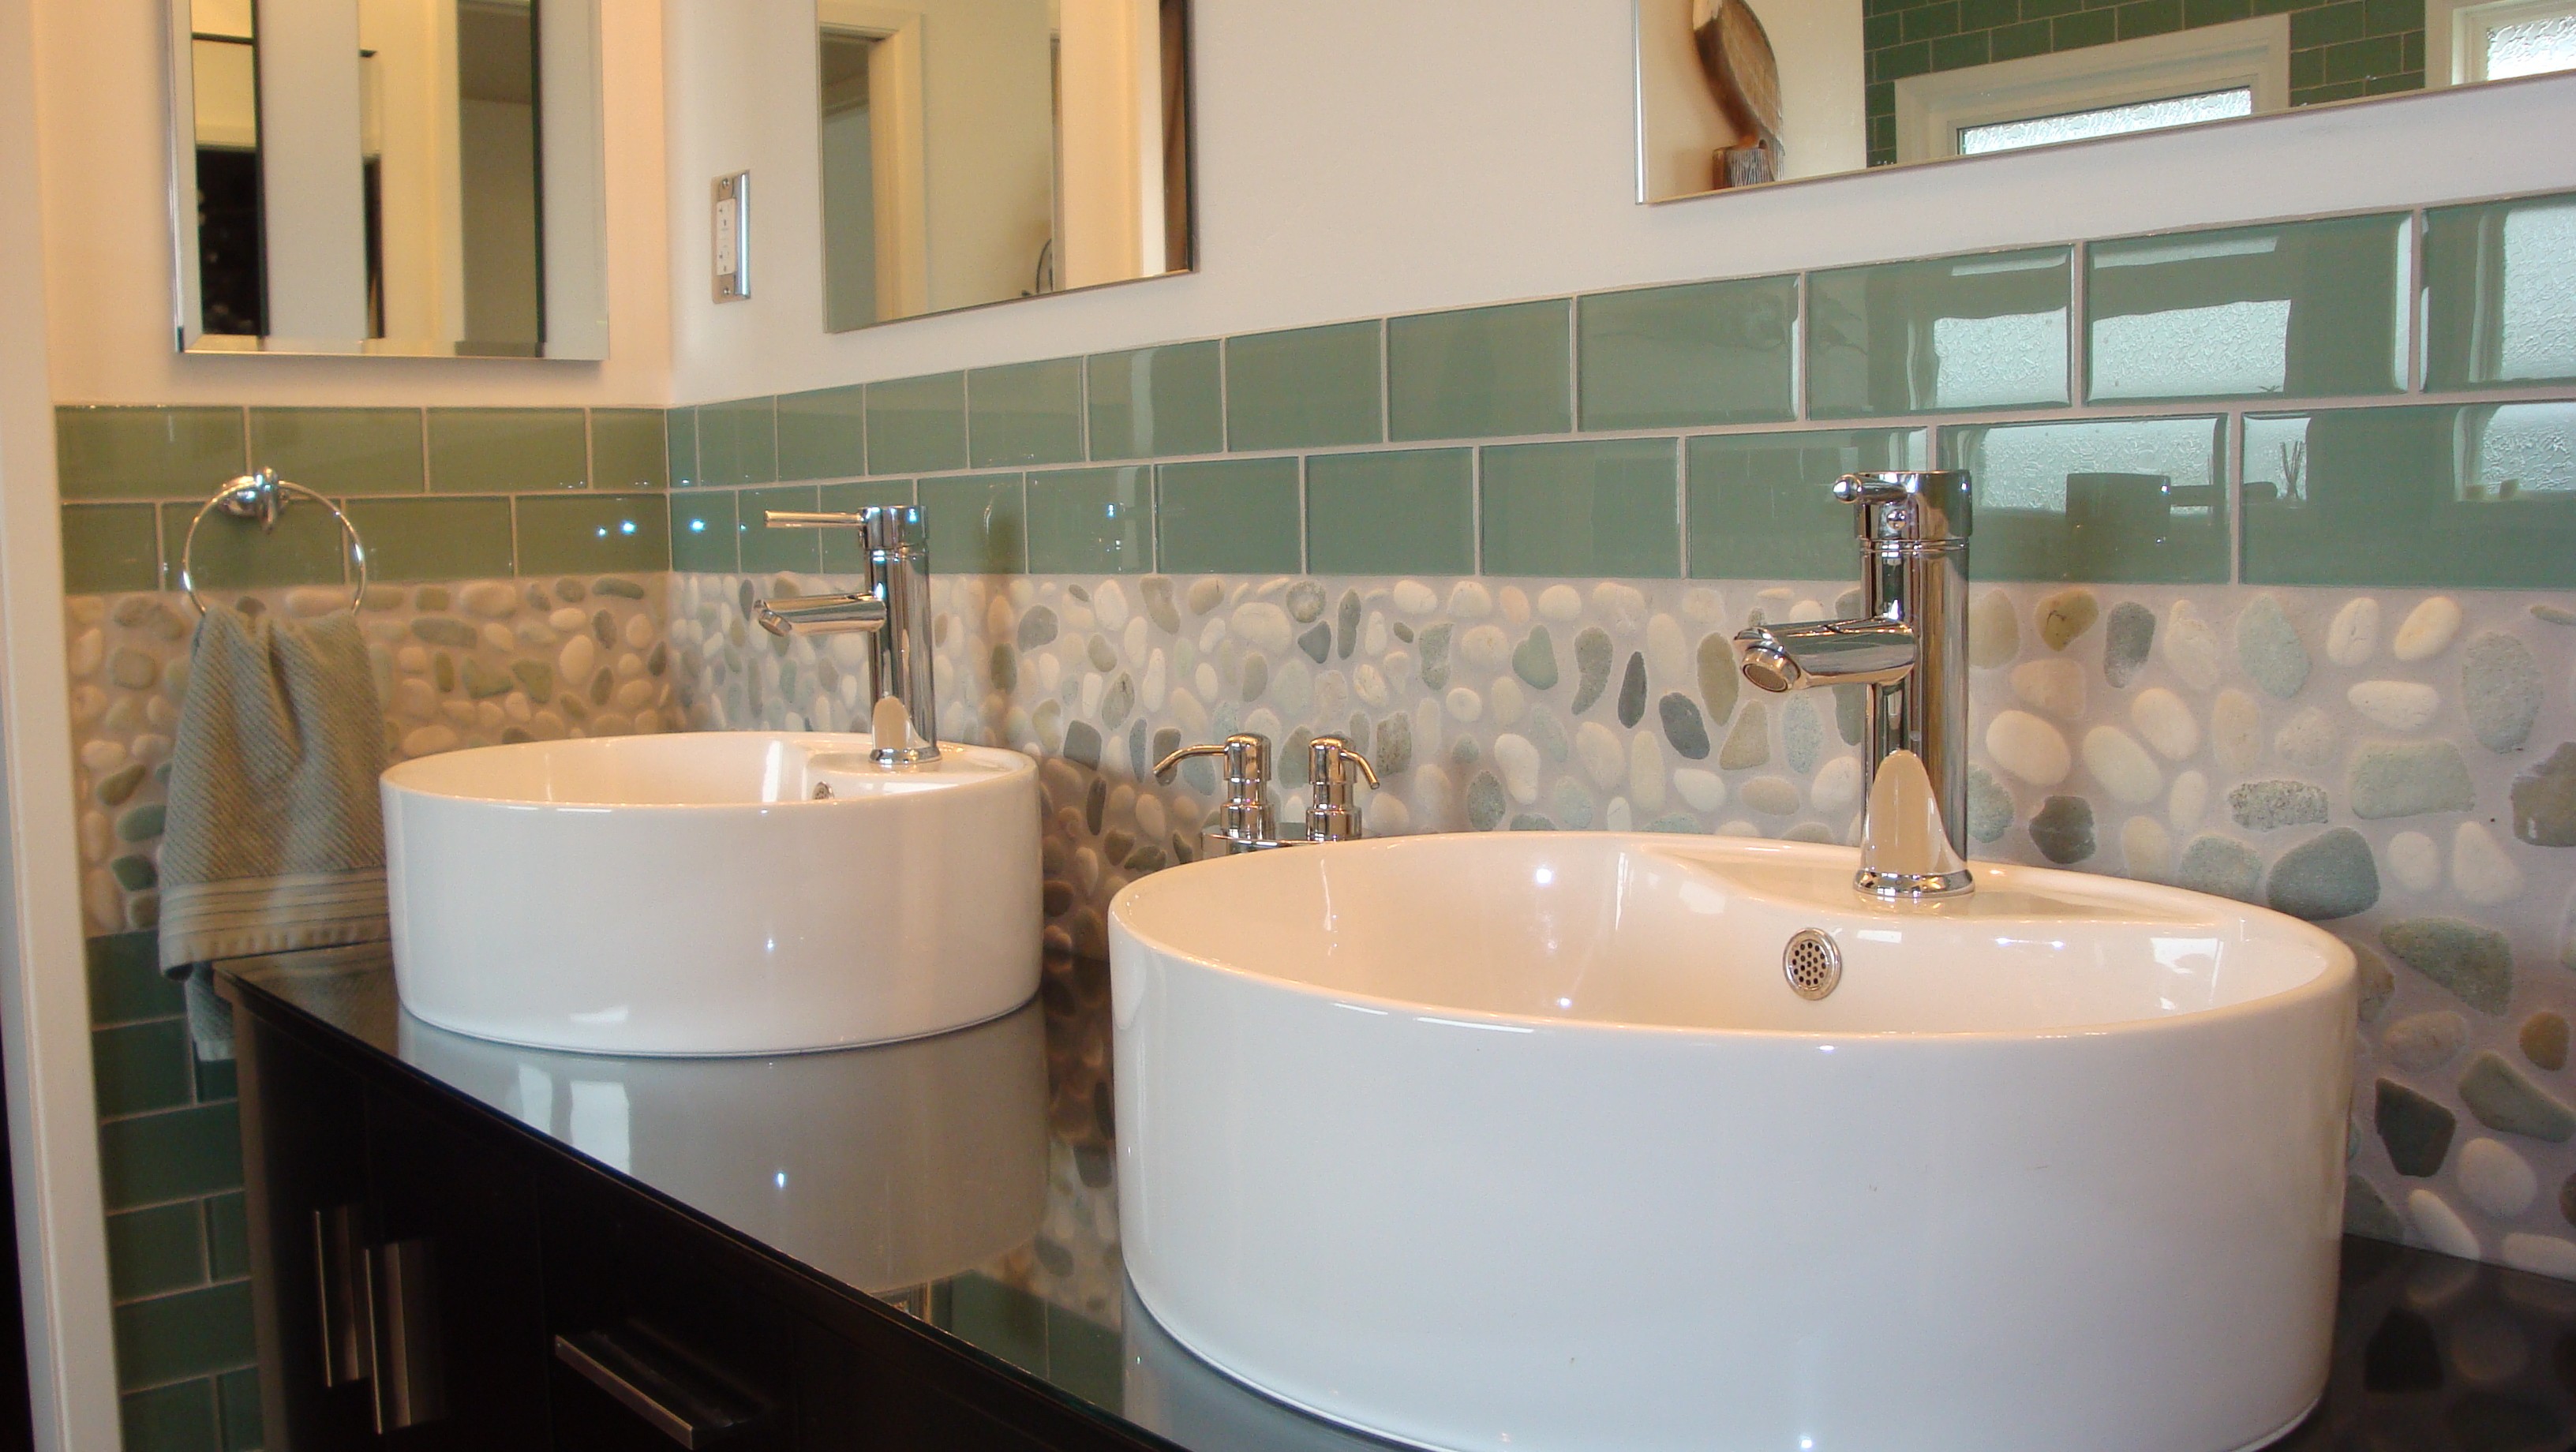 interior-bathroom-furniture-bath-ideas-modern-home-furniture-bathroom-ocean-pebble-tile-backsplash-designs-glass-tile-backsplash-in-with-interesting-decorations-round-ceramic-sink-and-chrome-ring-tow